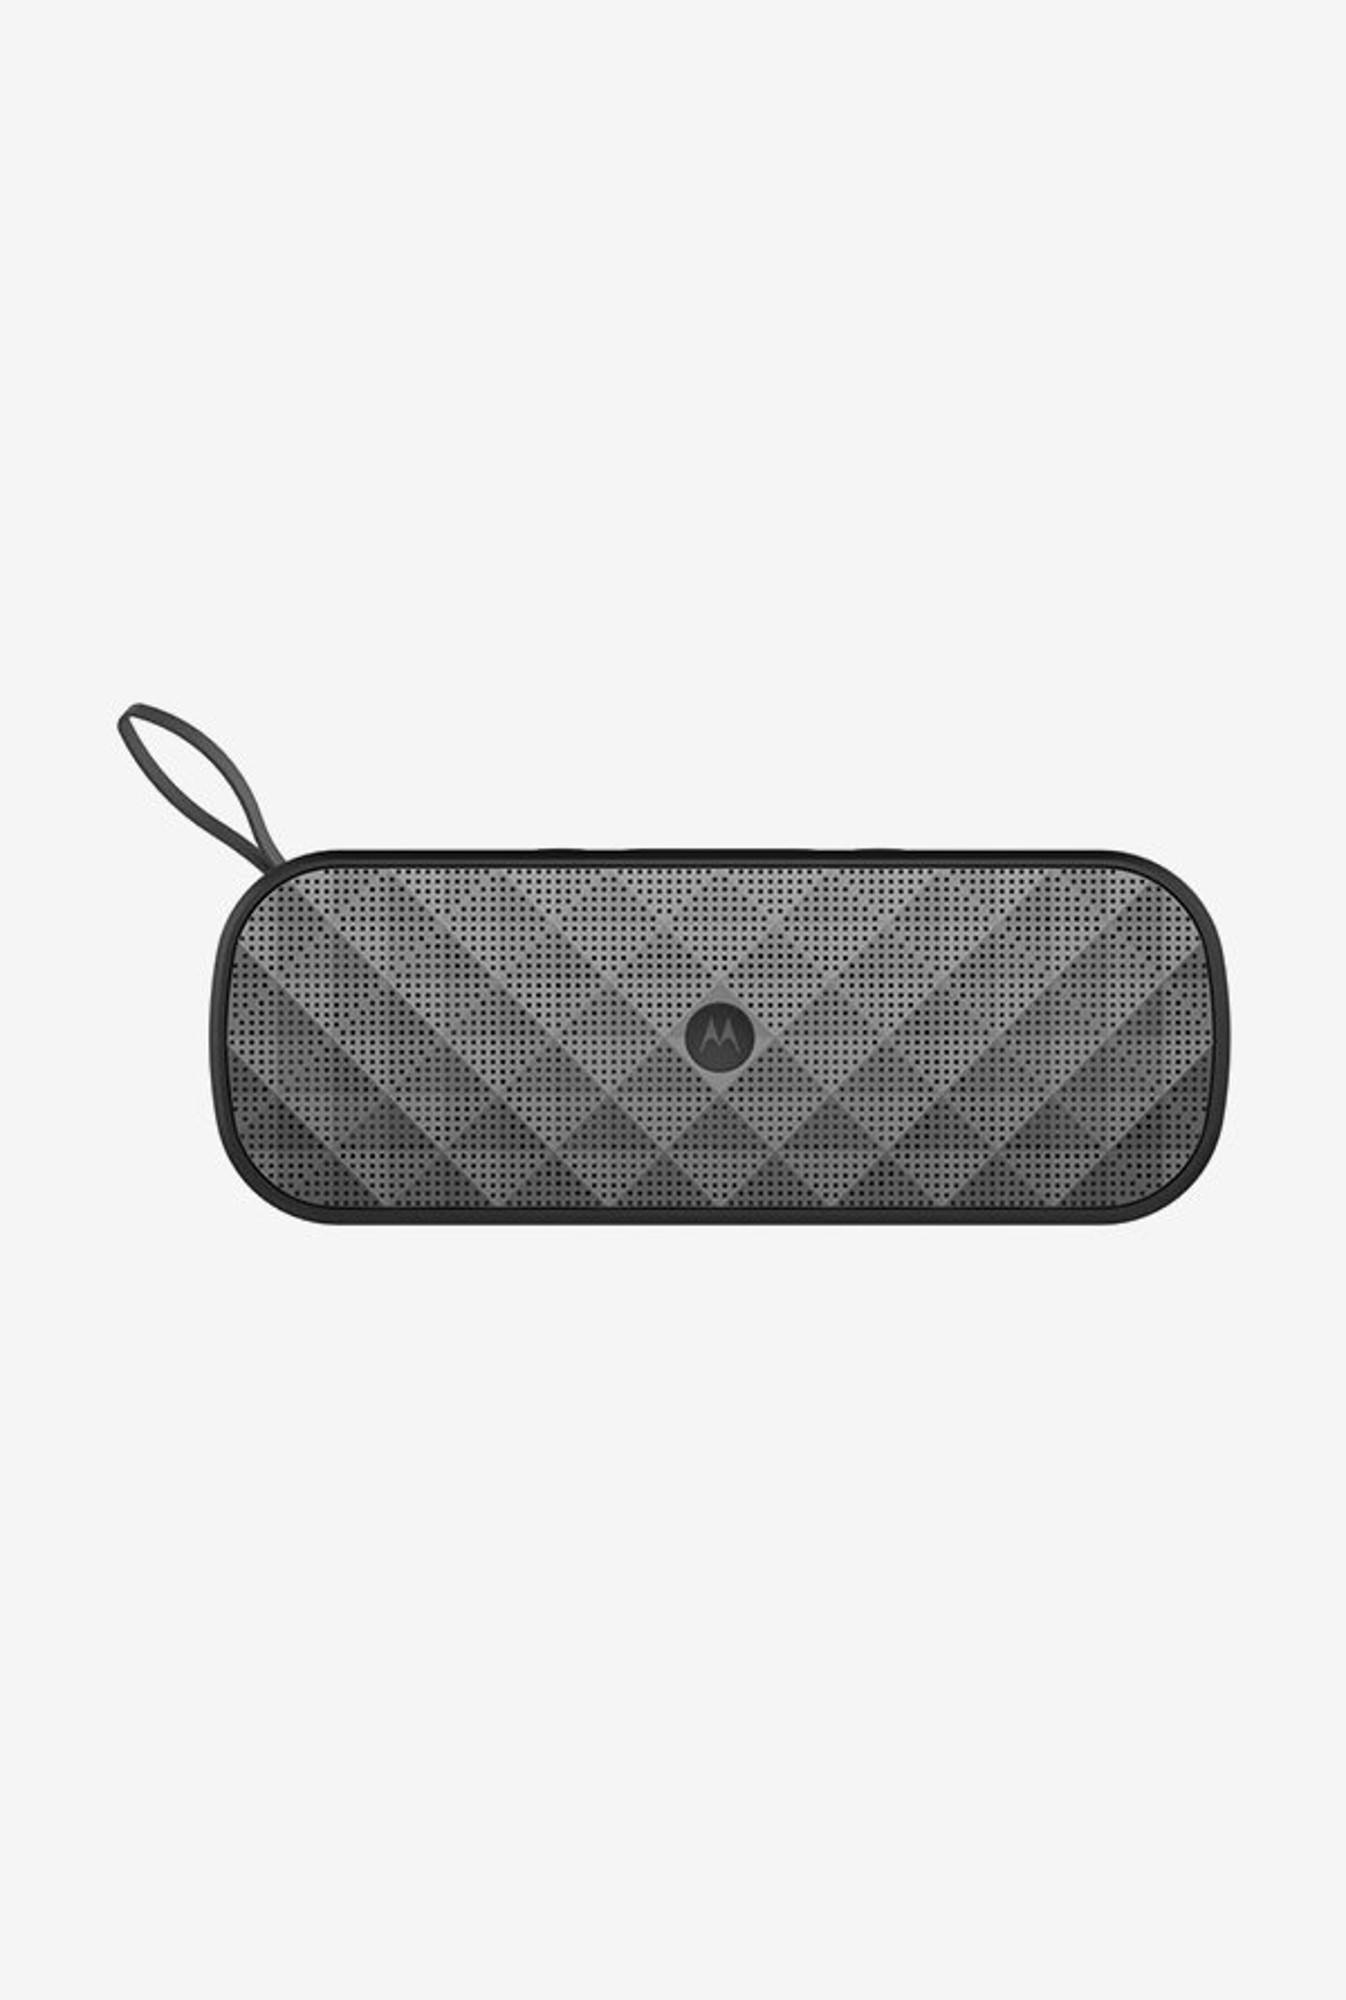 Motorola Sonic Play+ 275 Bluetooth Speaker [Special Offer]